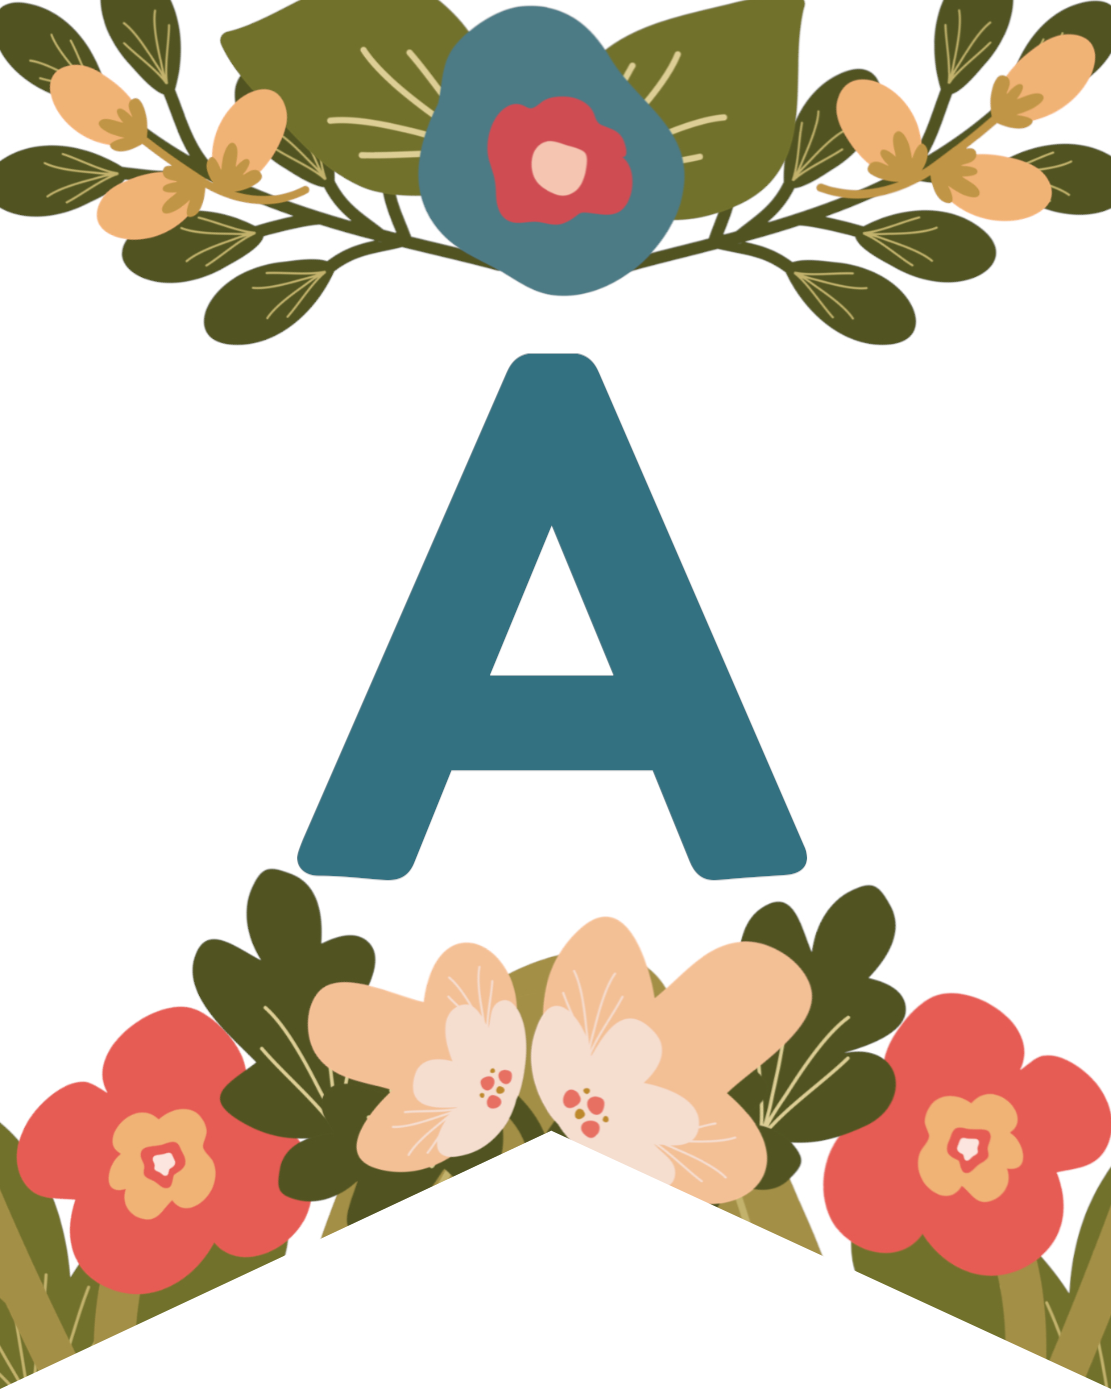 Flower Alphabet Banner Letters Free Printable Paper Trail Design